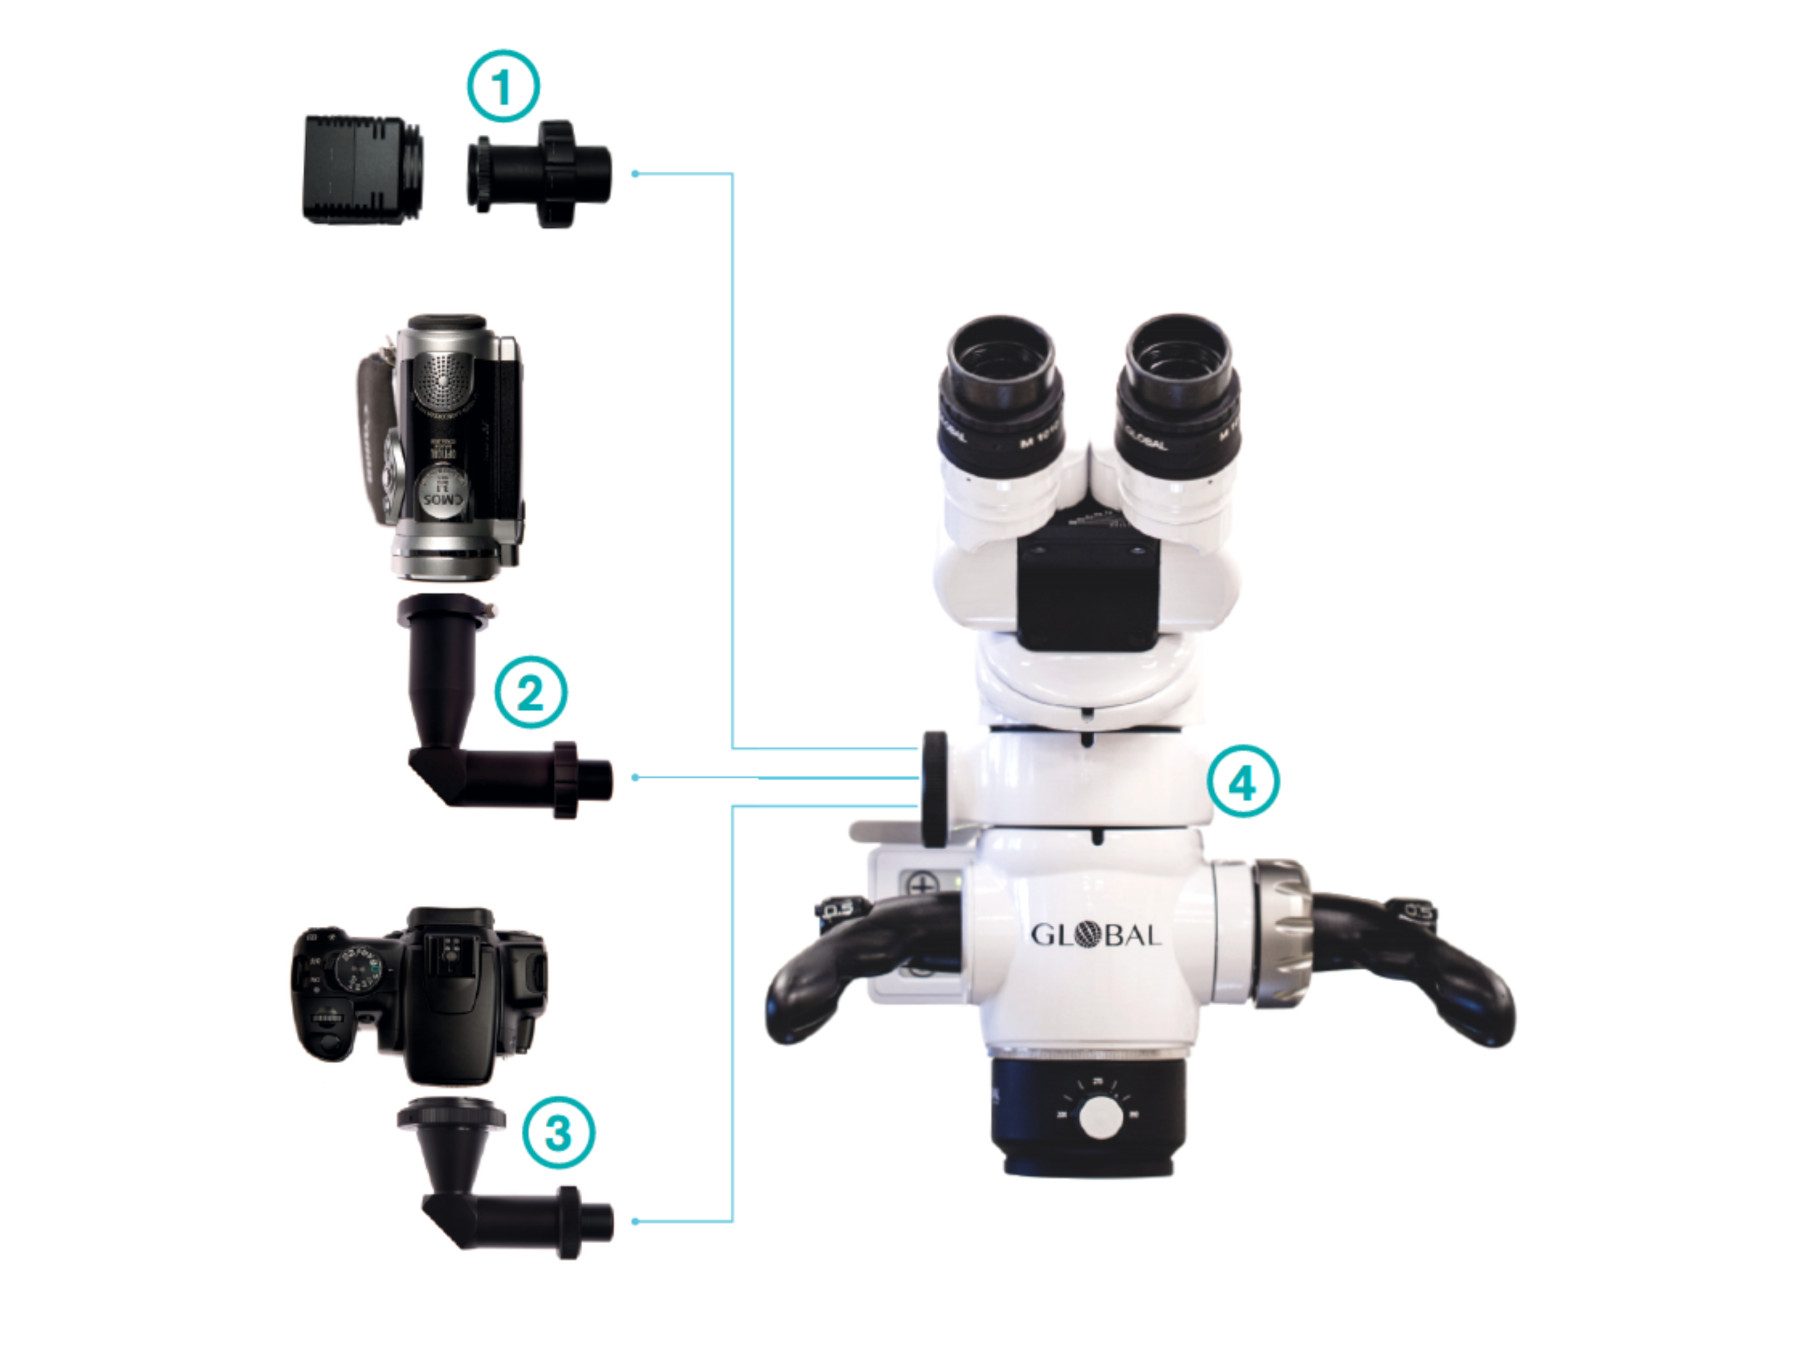 GLOBAL Dental-Mikroskope - Digitale Dokumentation